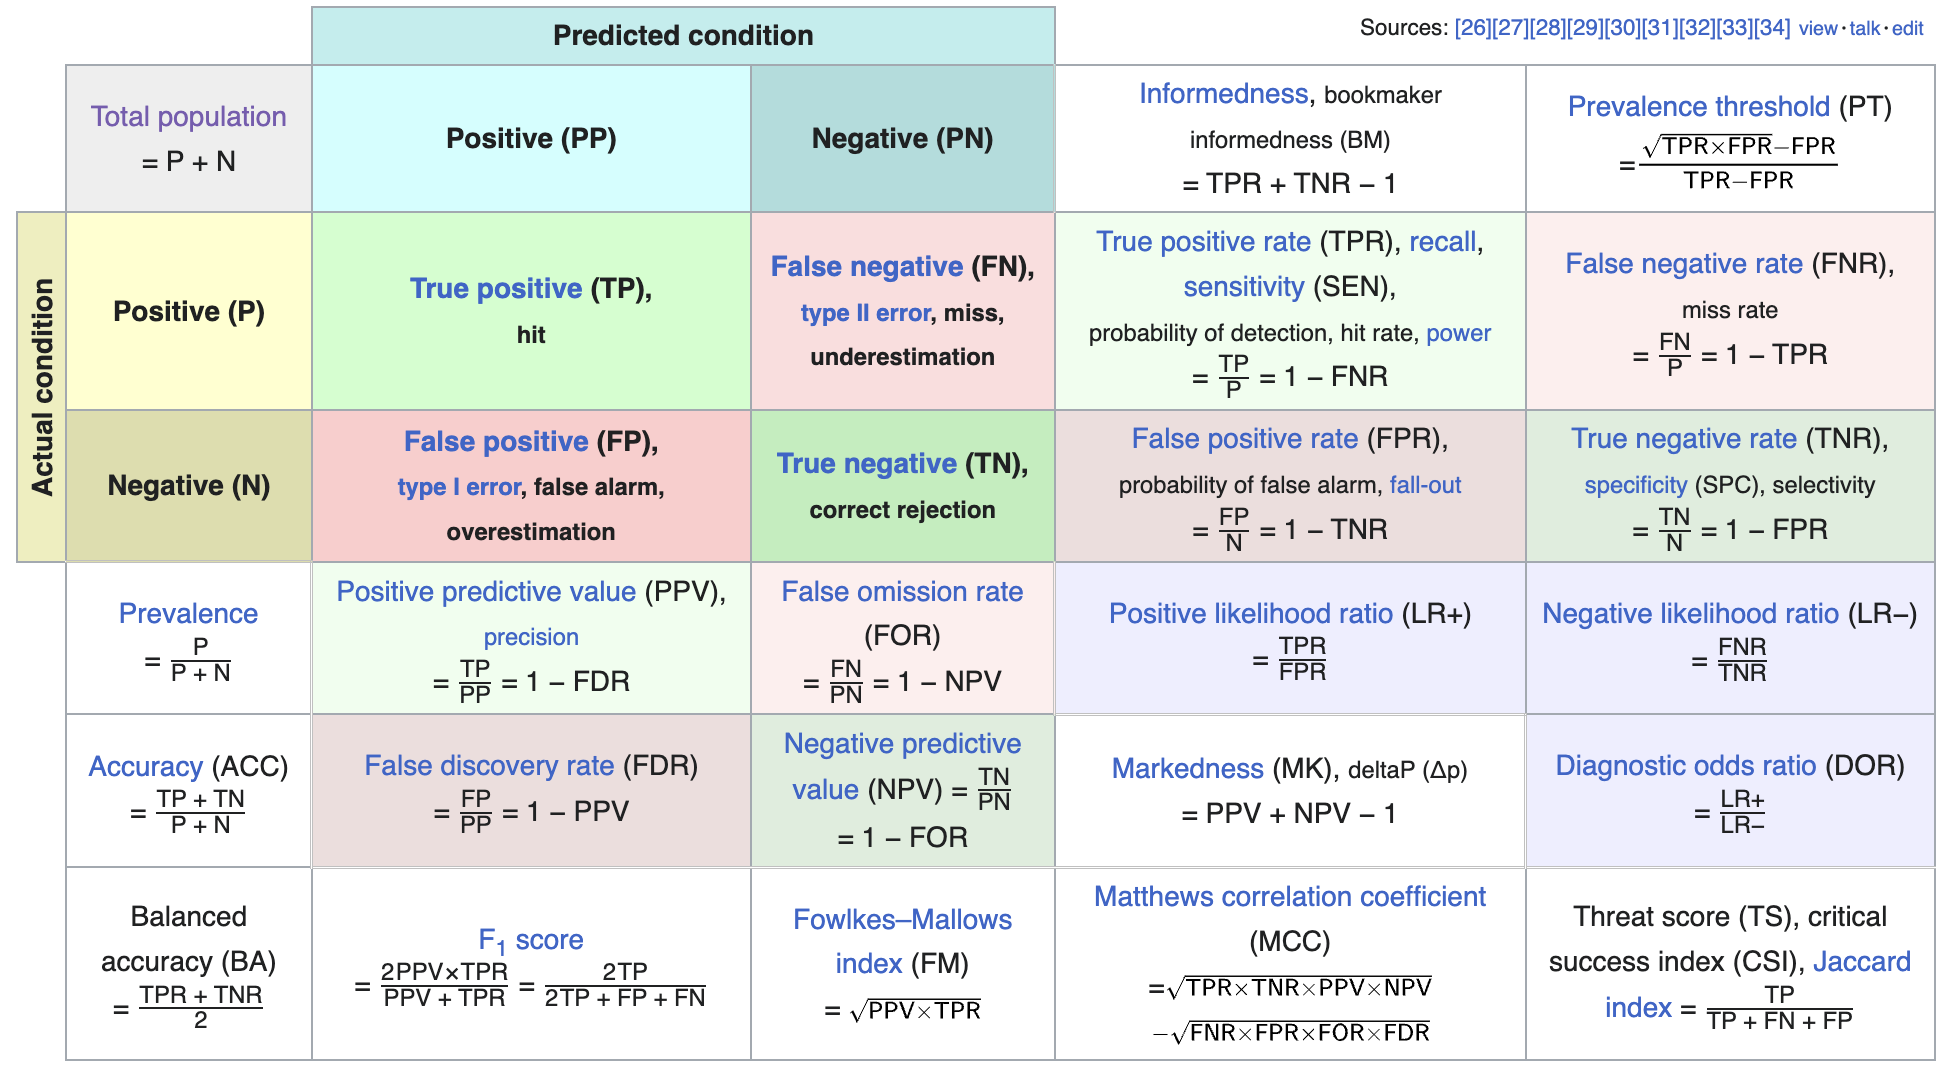 Tipos de erro coforme artigo Confusion matrix da Wikipedia